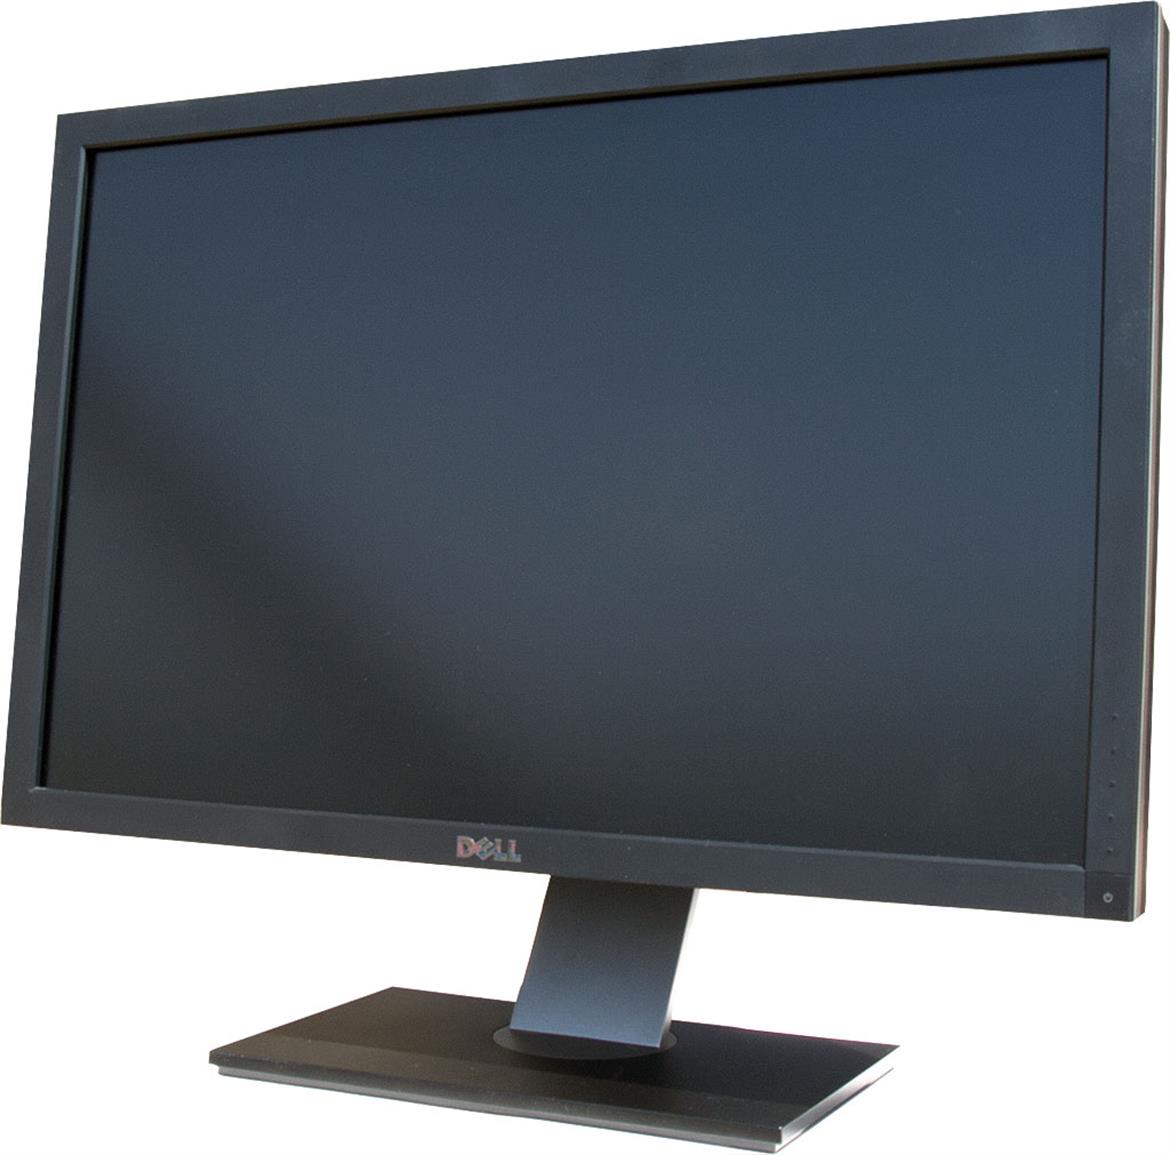 Dell UltraSharp U3011 30-inch Monitor Review